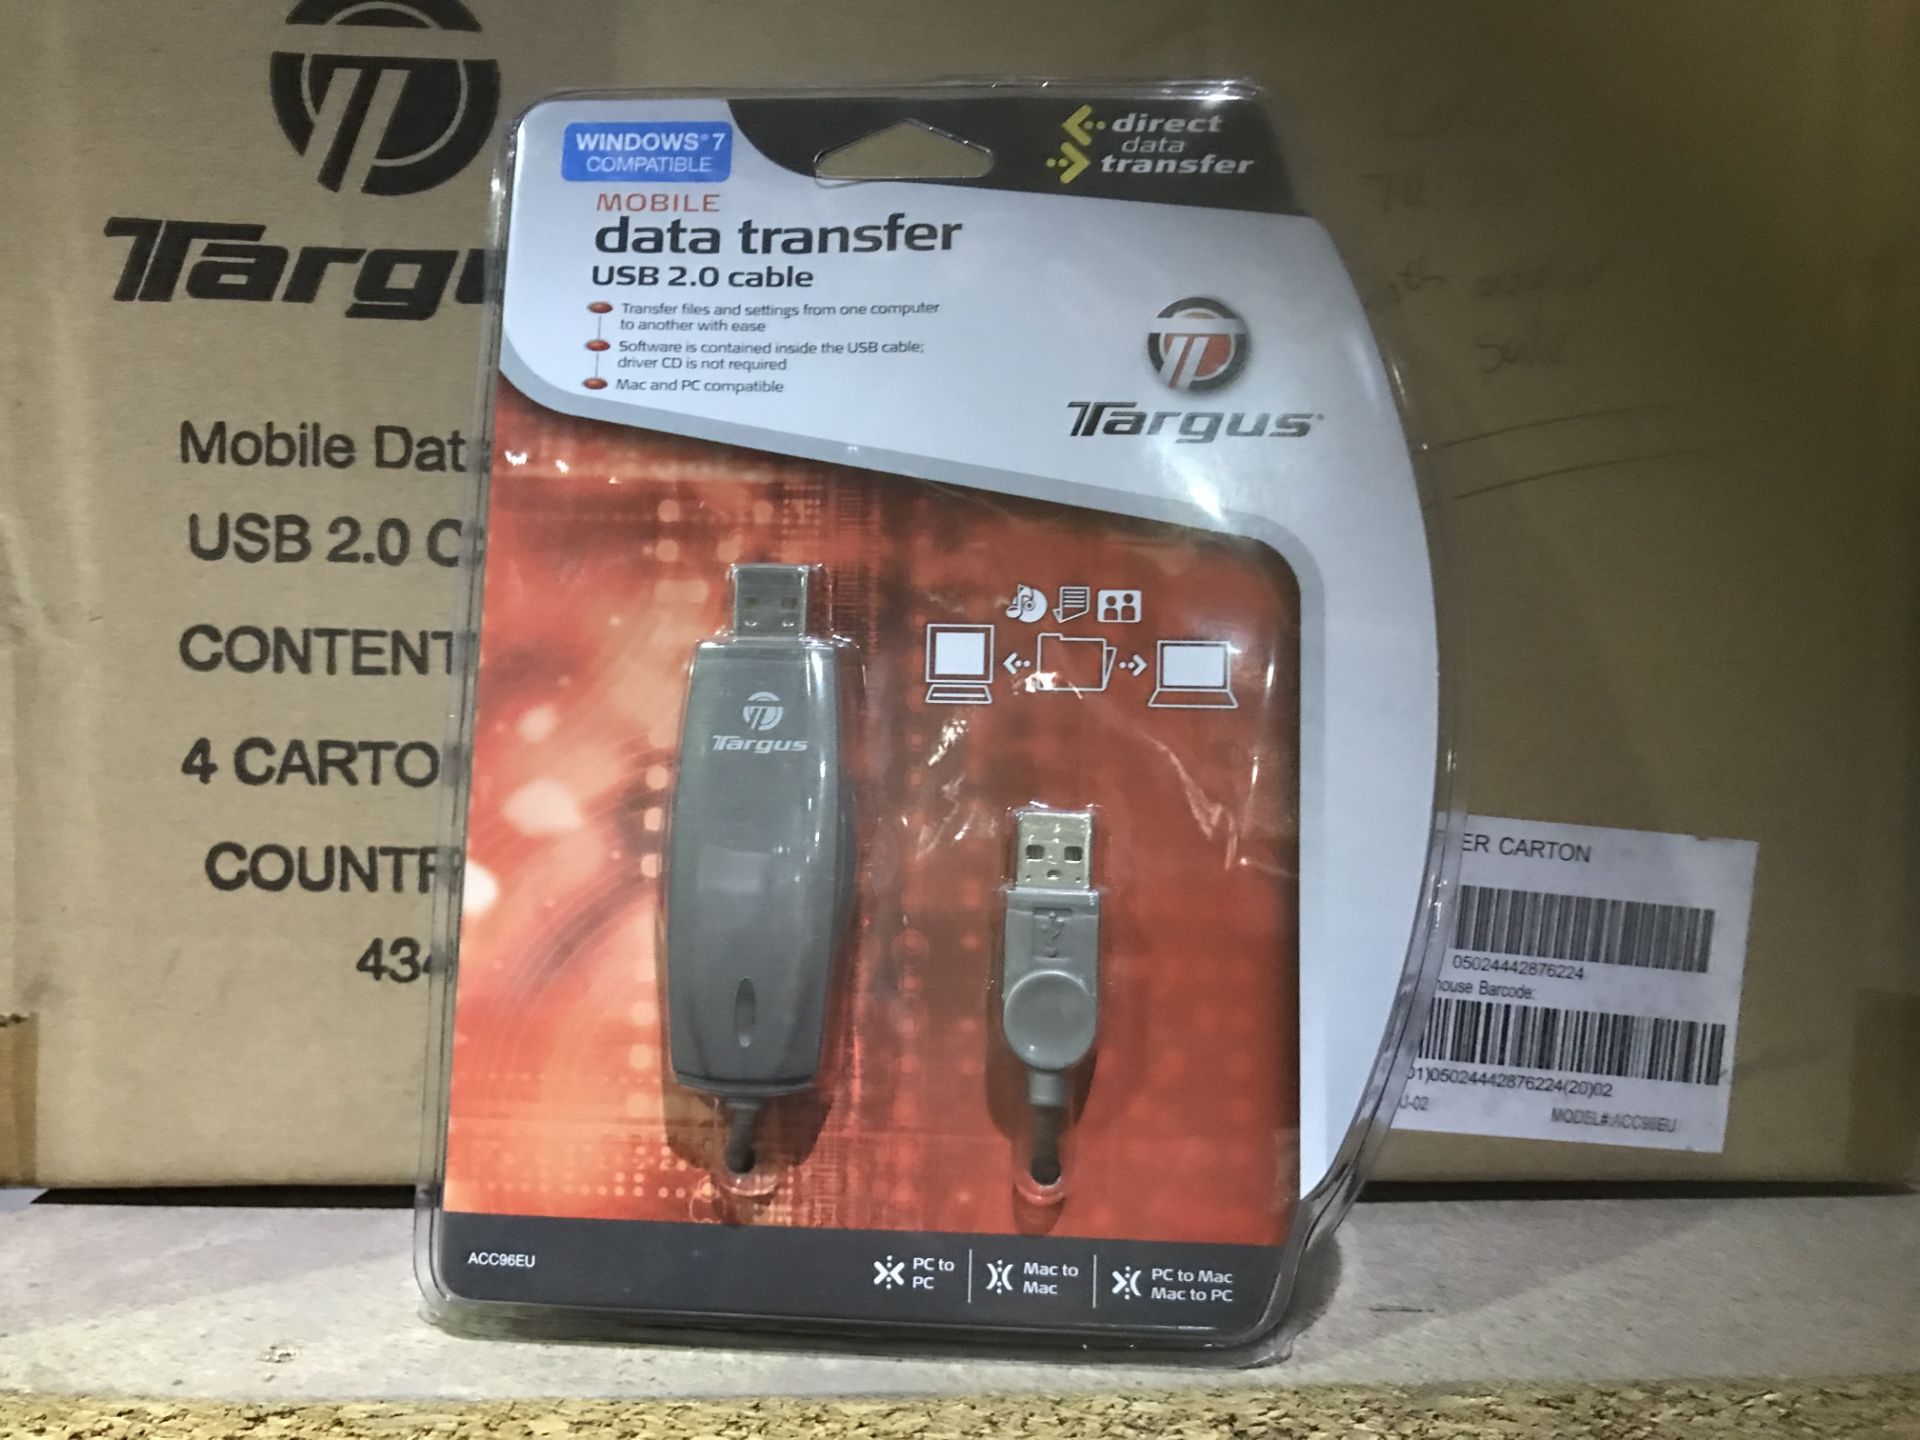 12 X TARGUS MOBILE DATA TRANSFER USB 2.0 CABLE IN 1 BOX